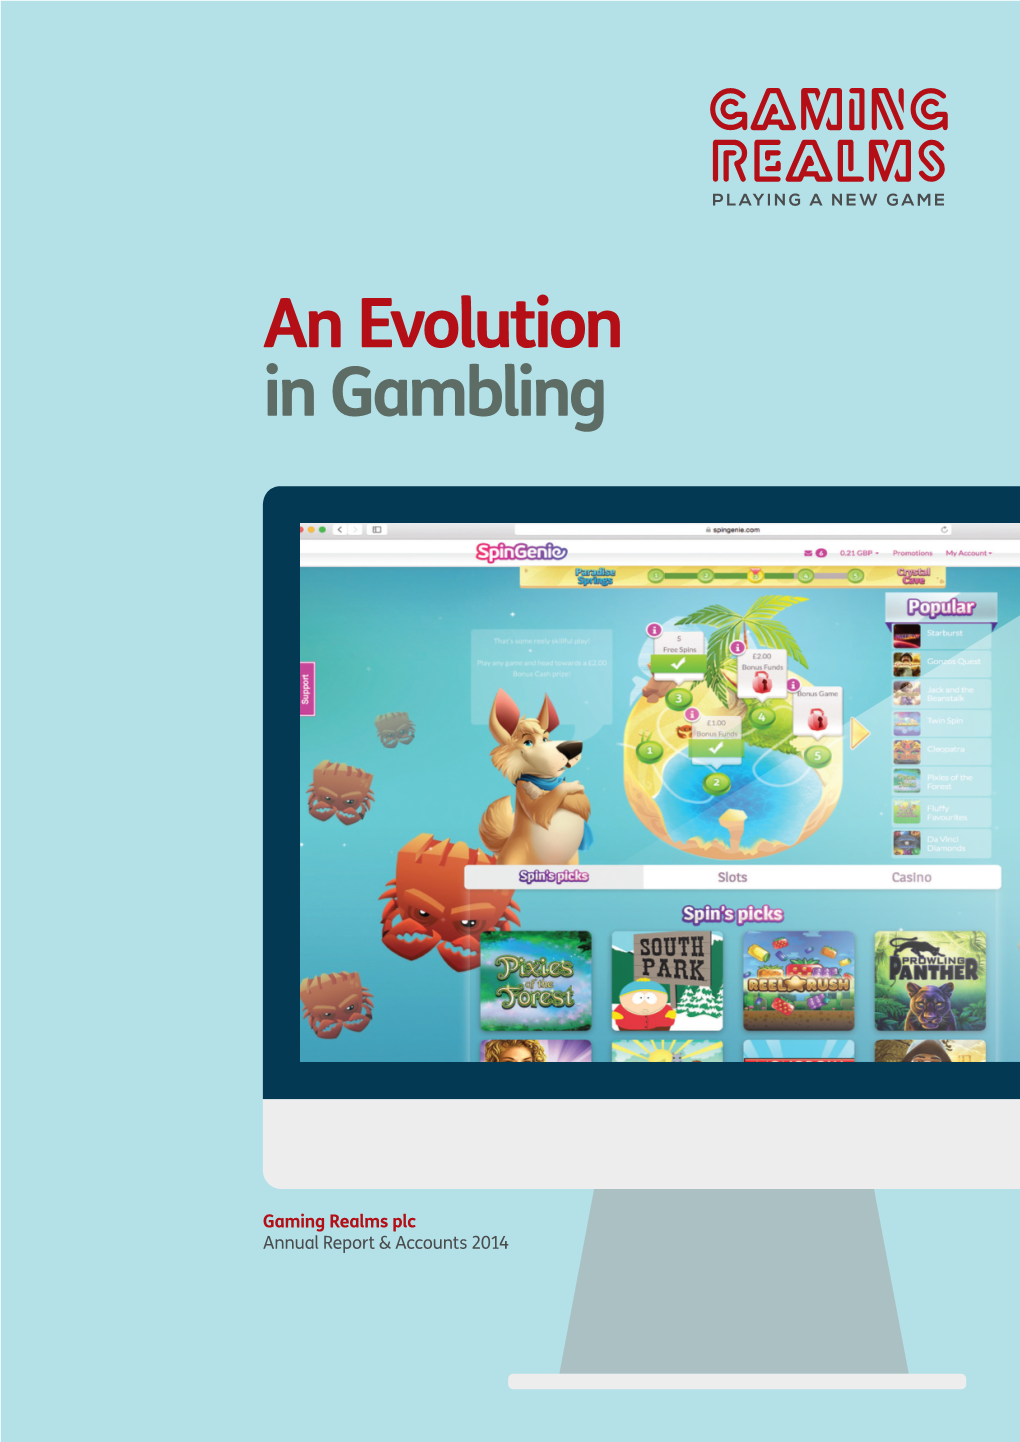 An Evolution in Gambling